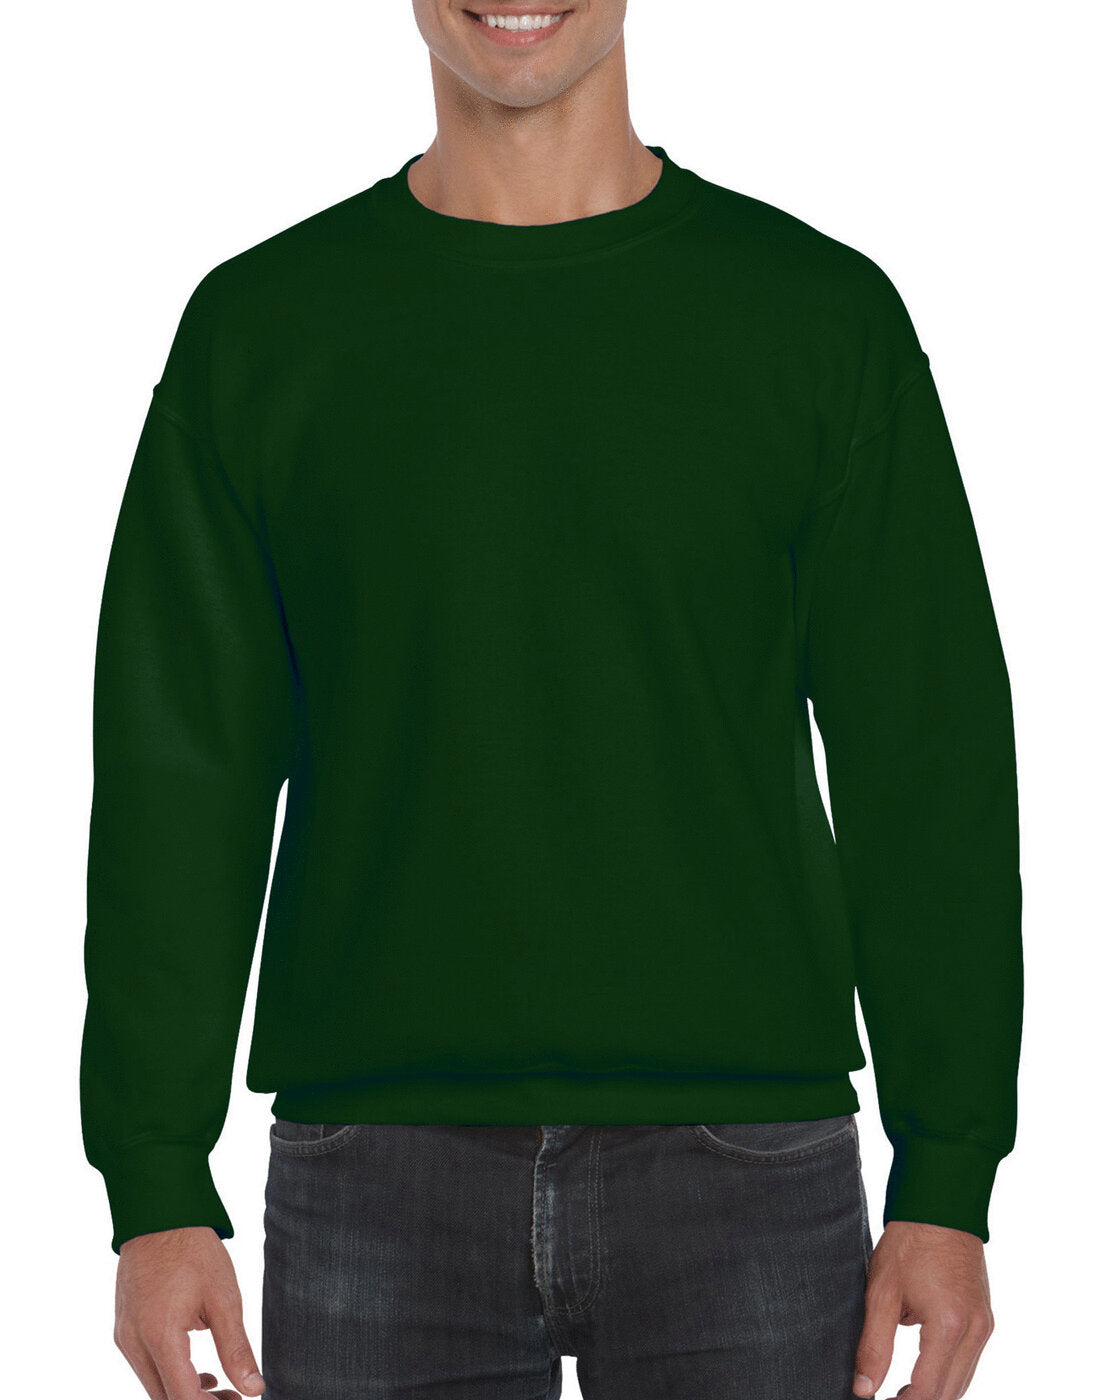 Gildan Dryblend Adult Crew Neck Sweatshirt - Forrest Green